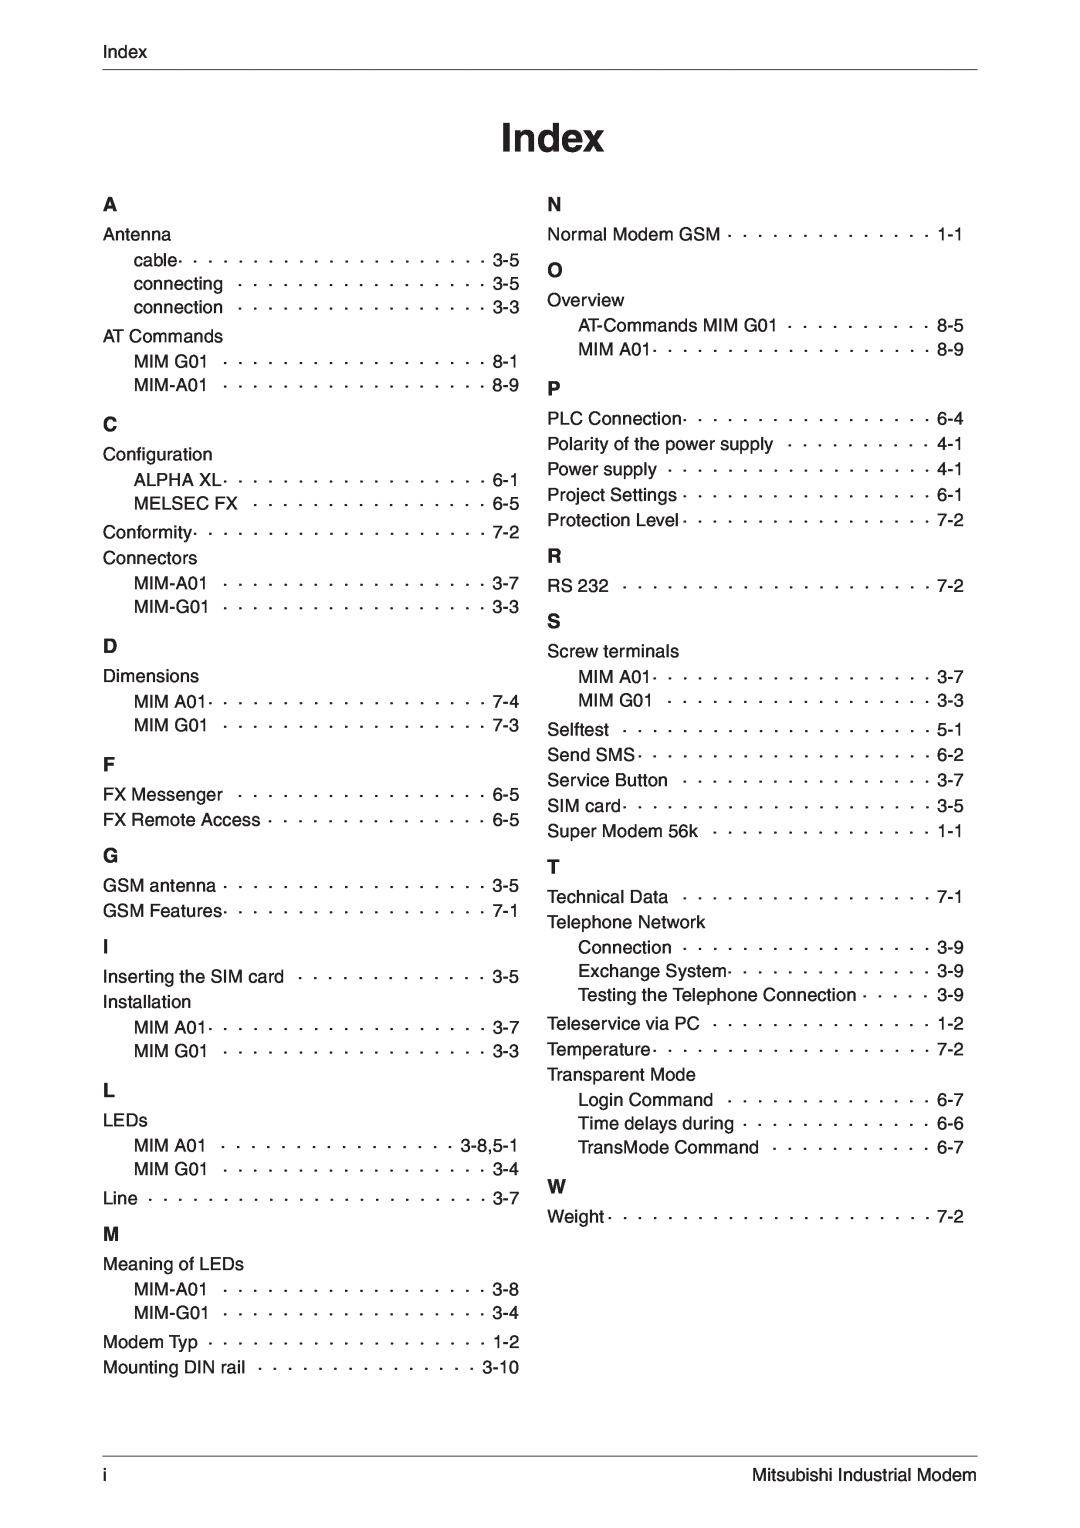 Mitsubishi Electronics MIM-A01, MIM-G01 manual Index 